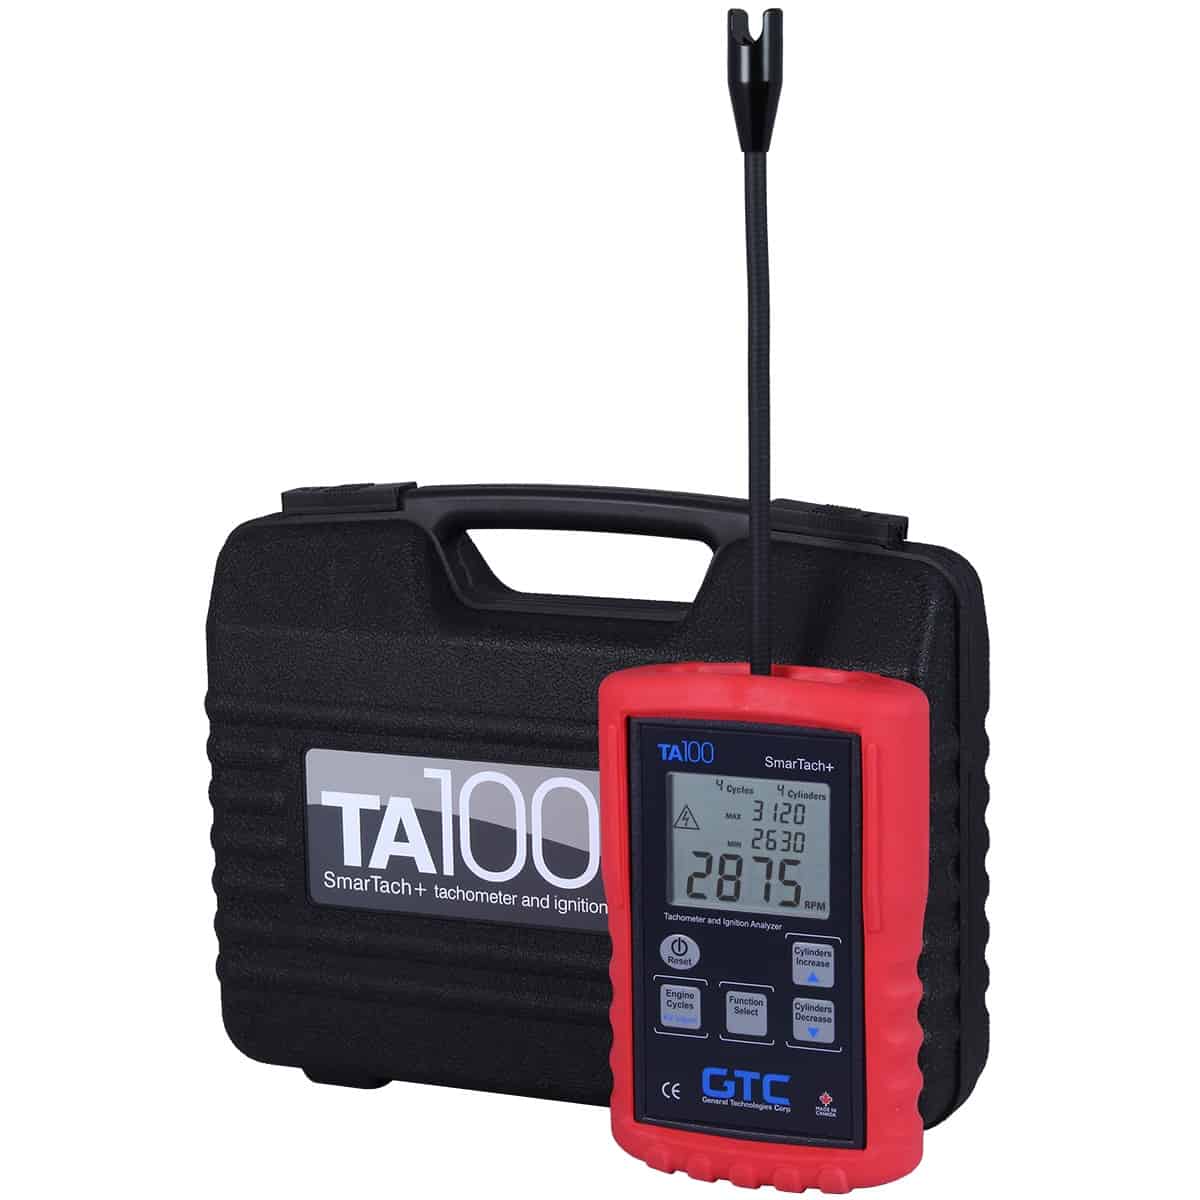 TA100 Smartach+ Digital Tachometer - General Technologies Corp.